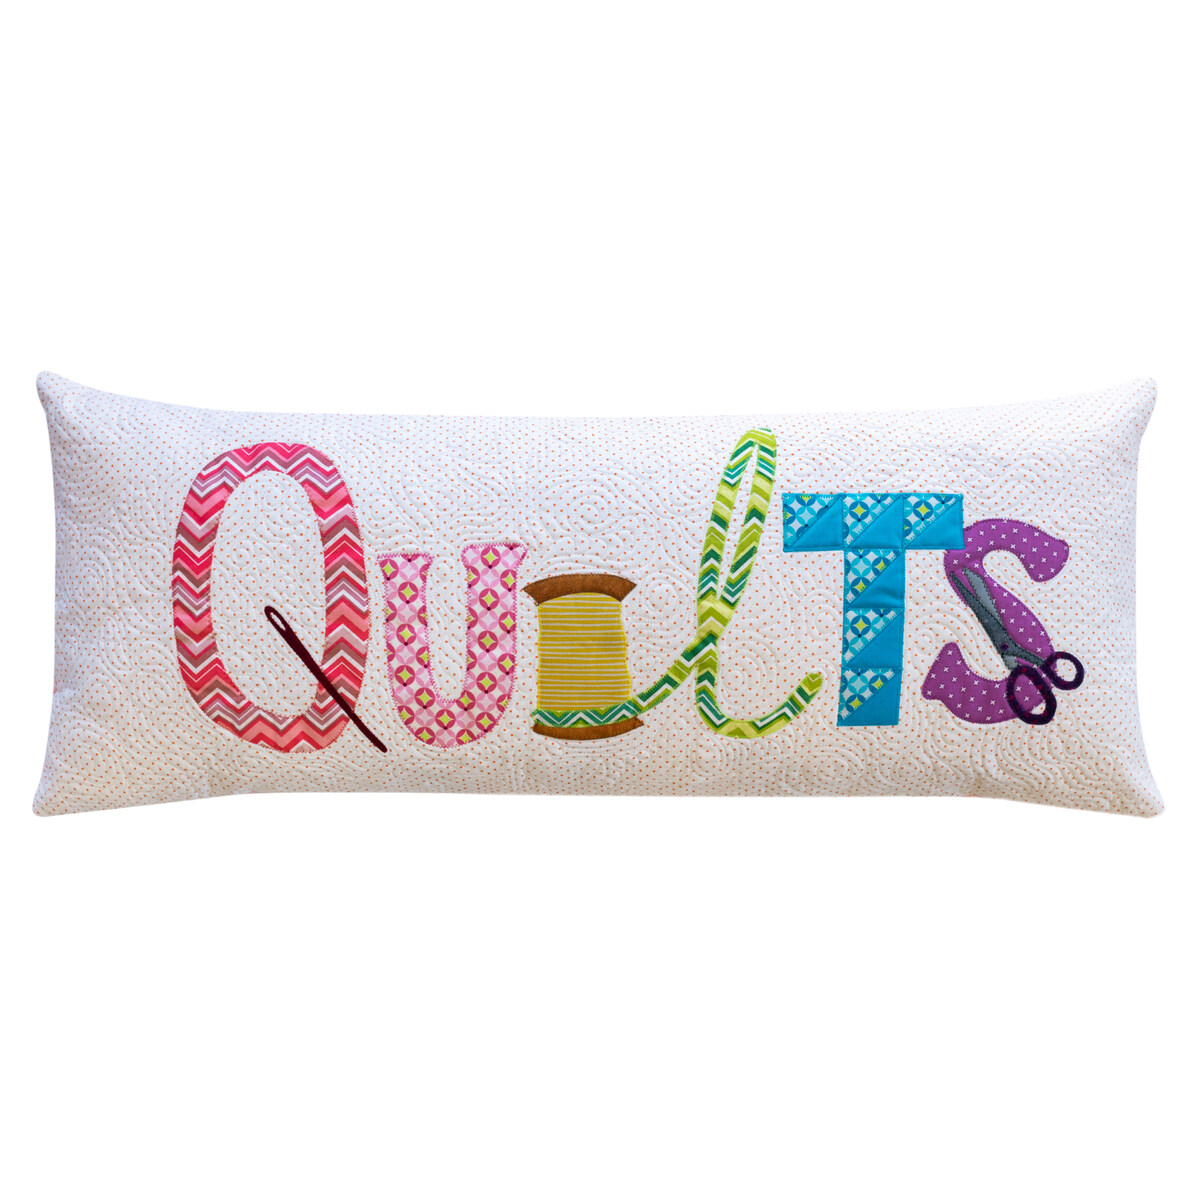 Learn To Quilt Series - Beginner Quilt Kit